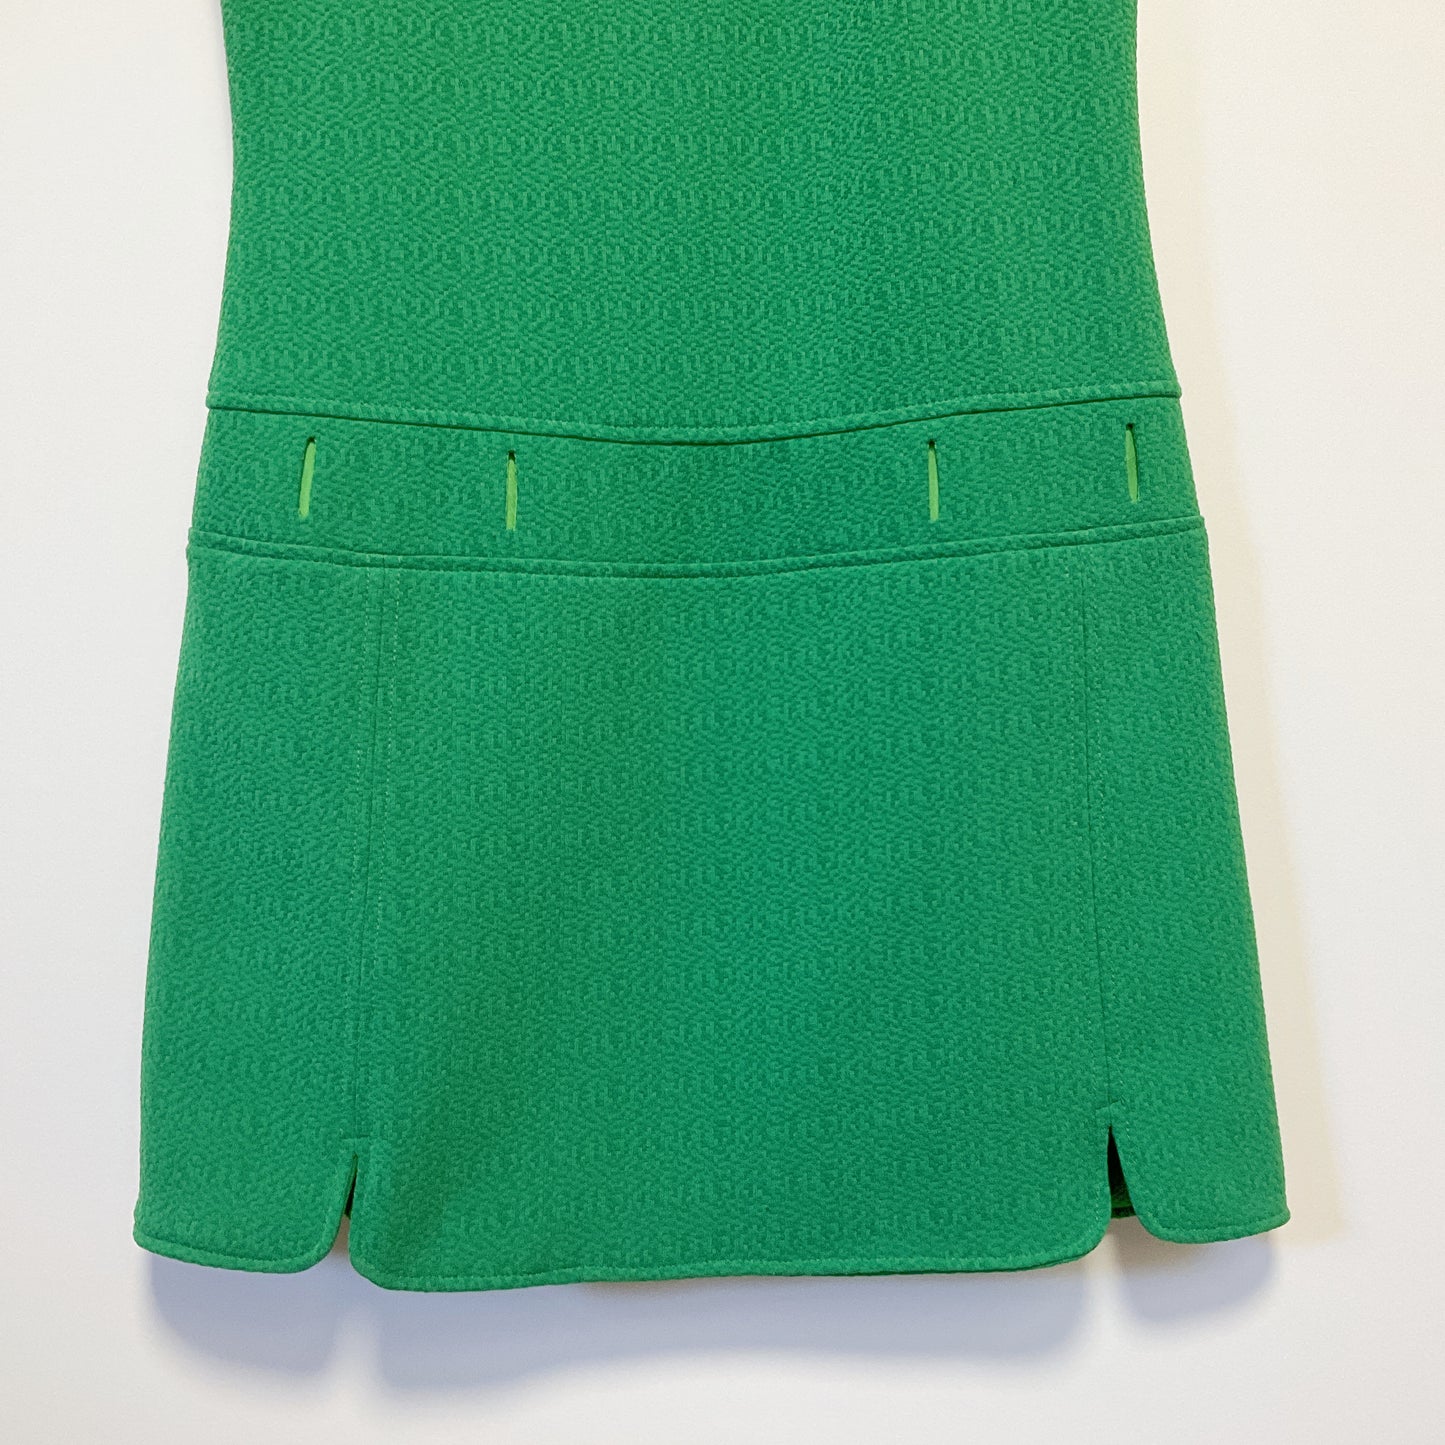 Tory Burch - Green Dress